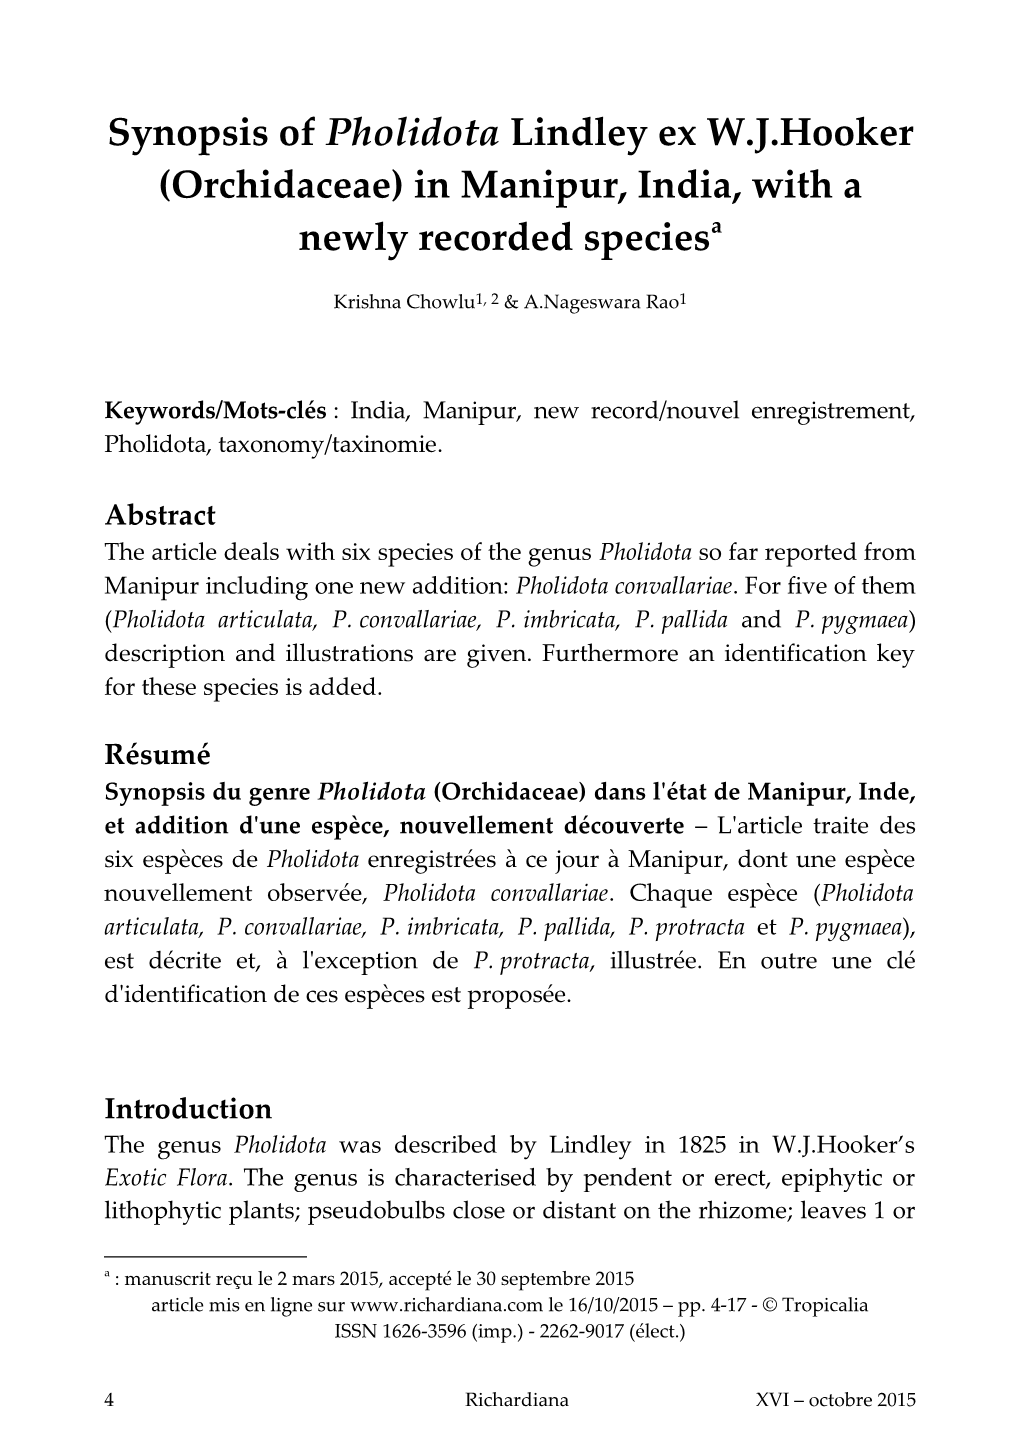 Synopsis of Pholidota Lindley Ex Wjhooker